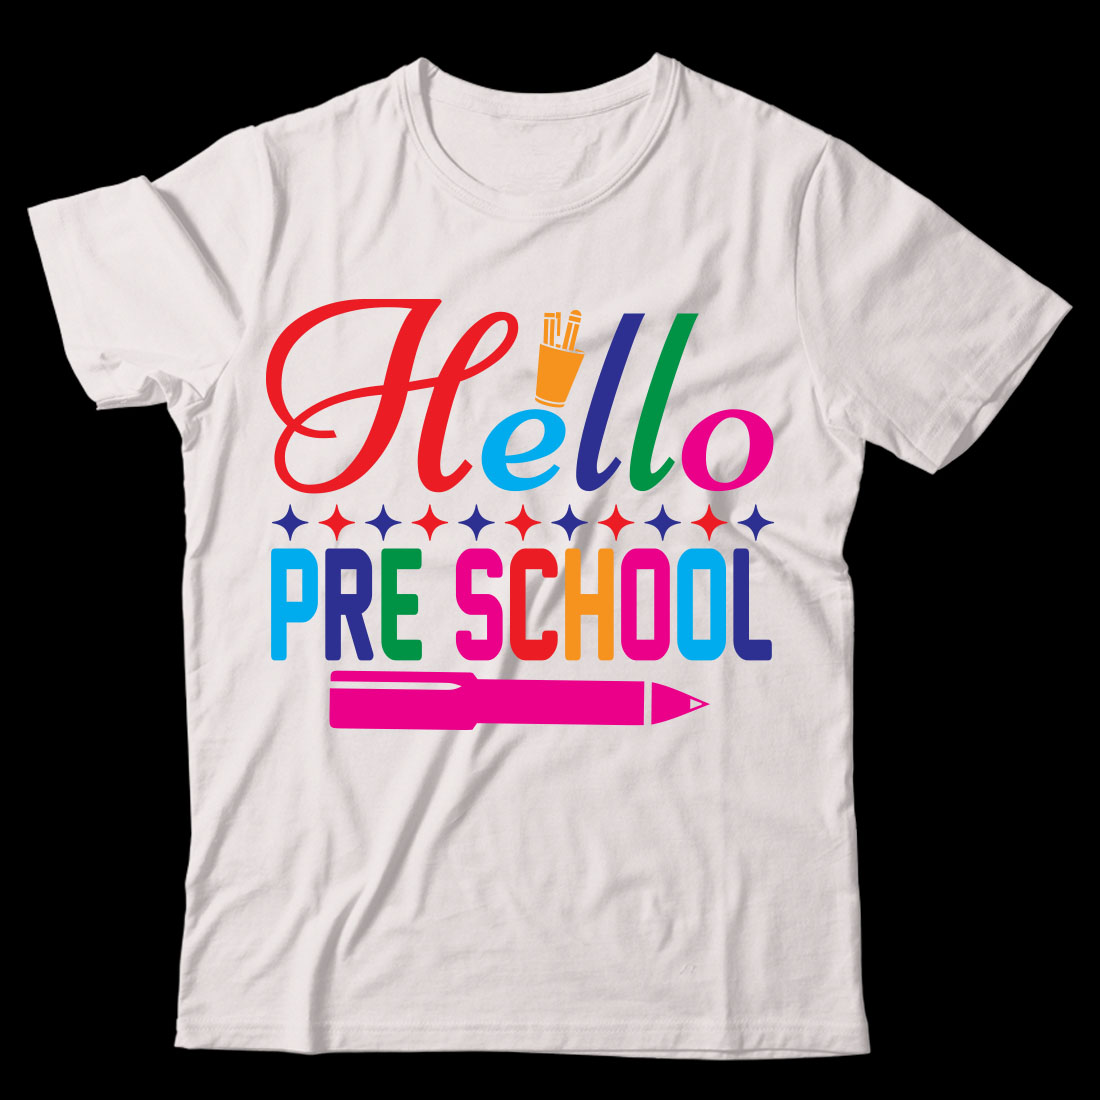 White t - shirt that says hello pre school.